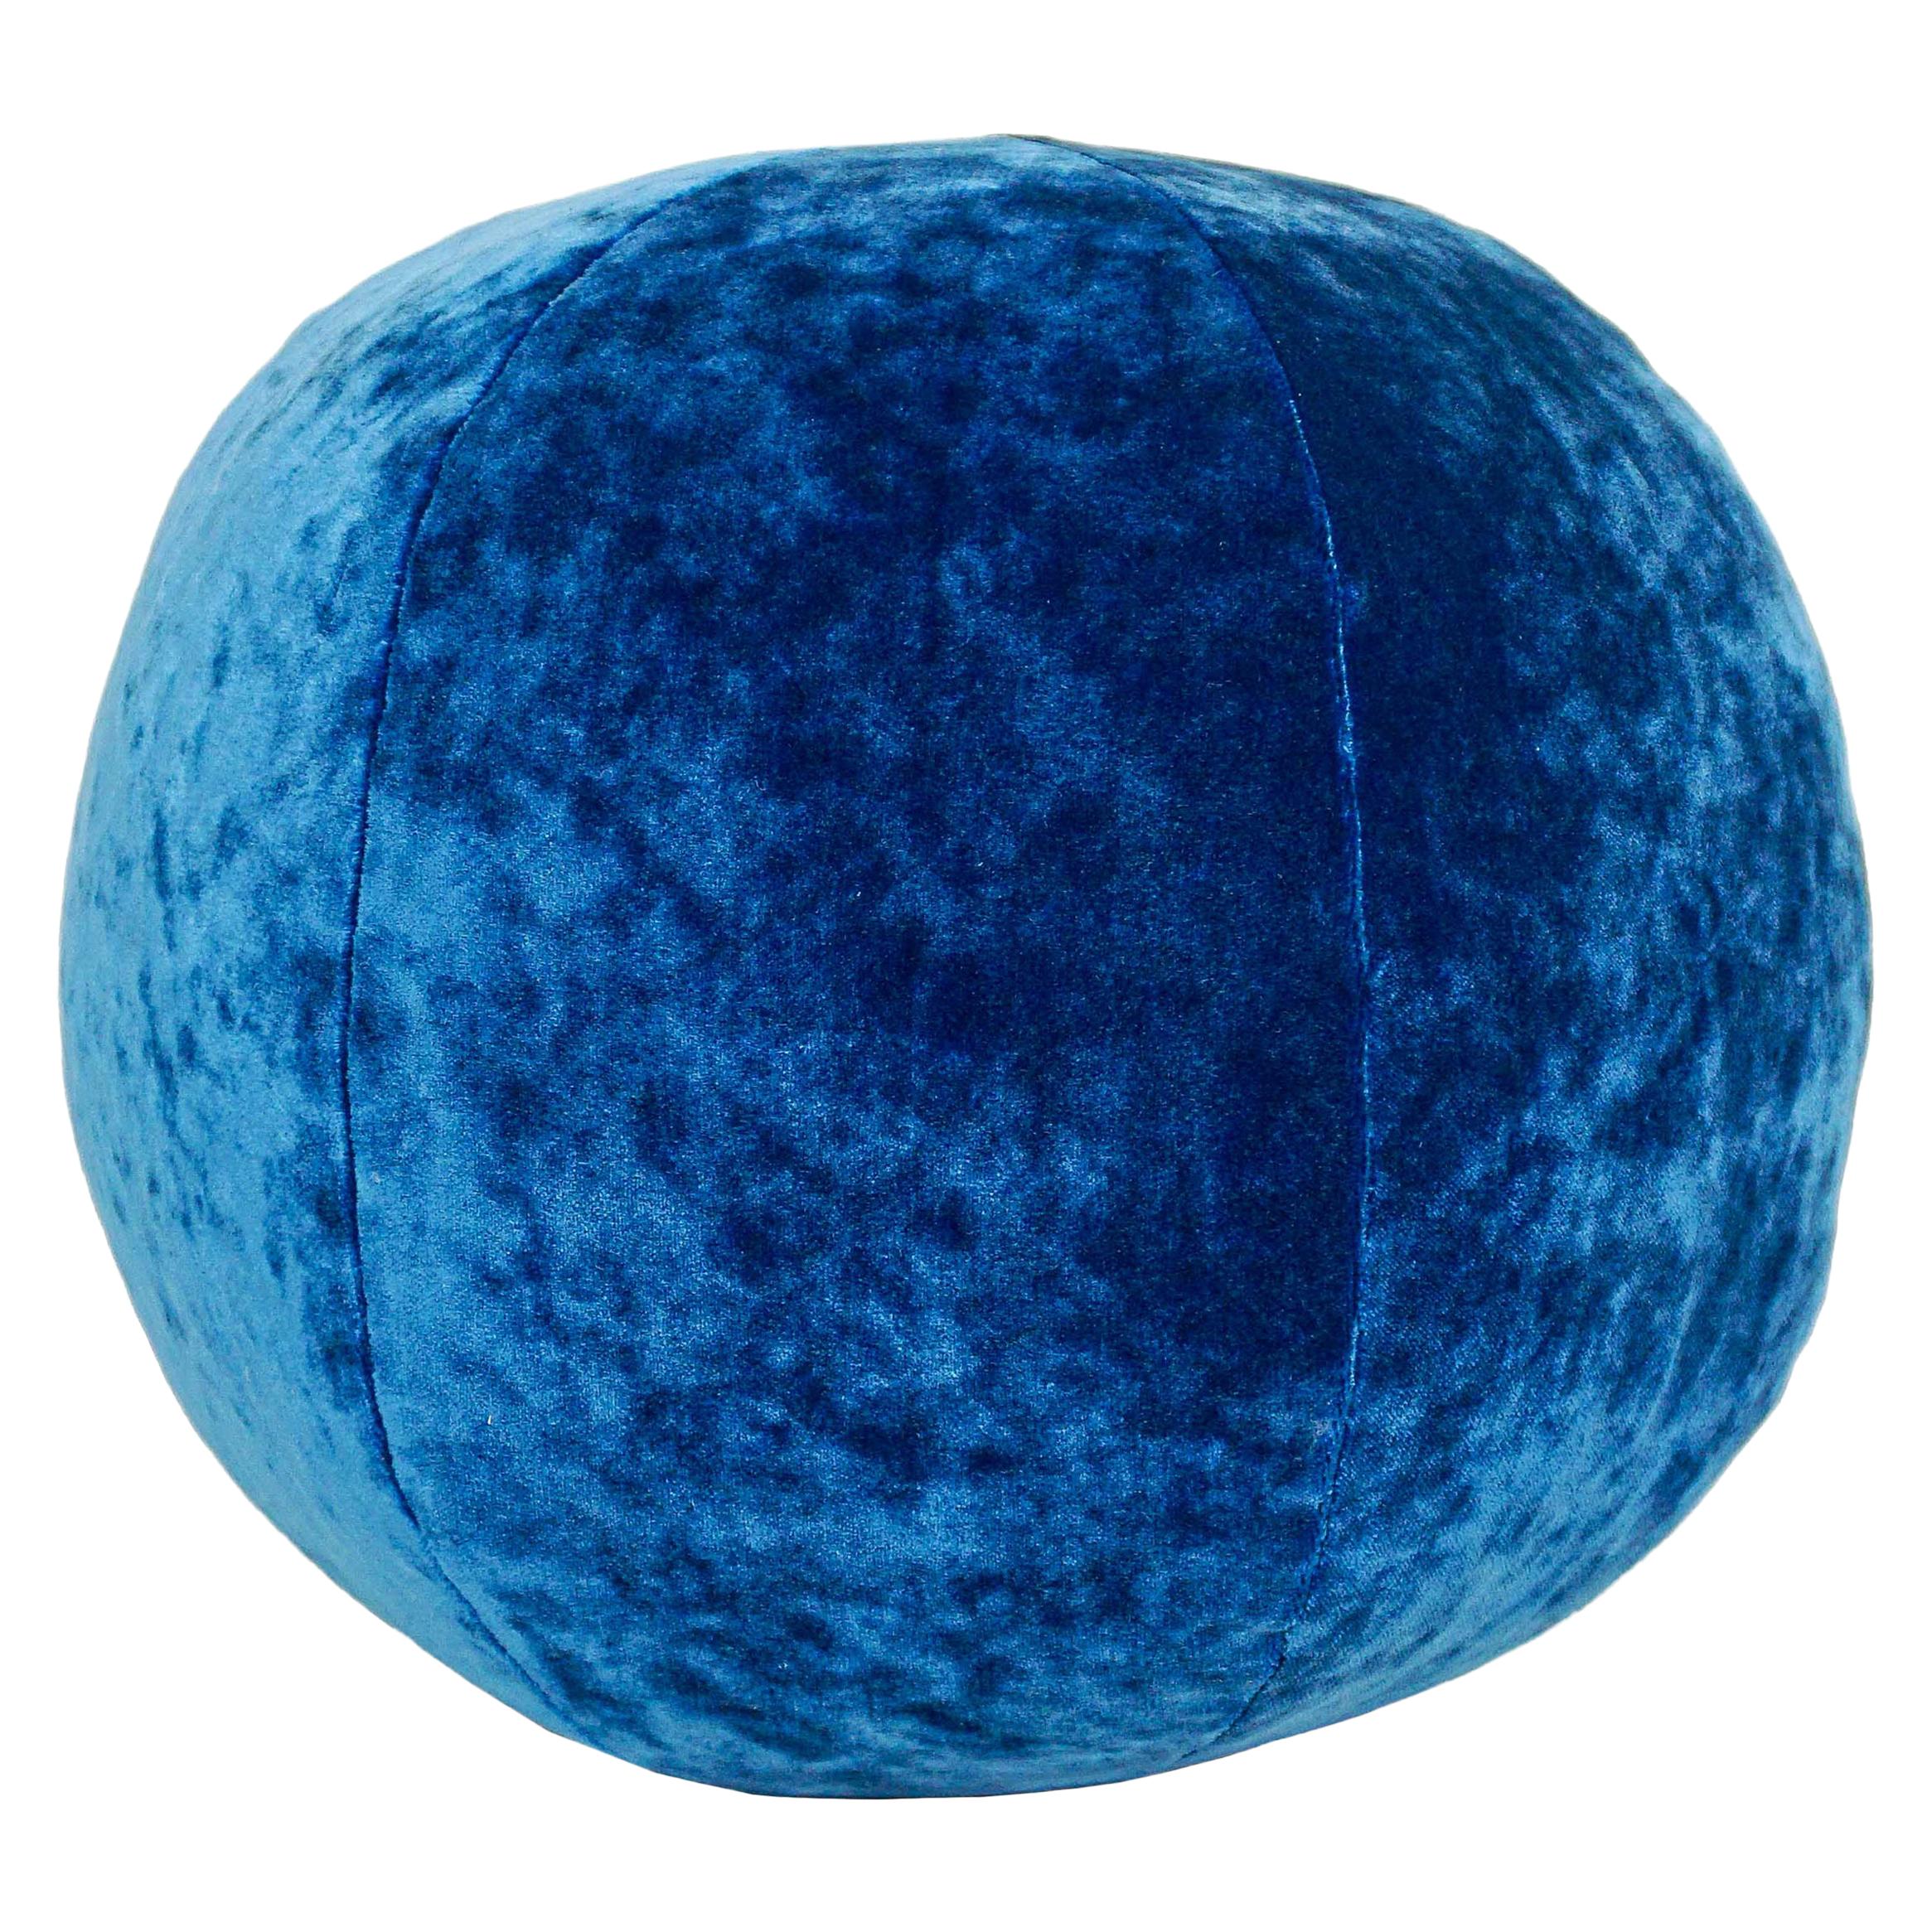 Electric Blue Crushed Velvet Ball Pillow